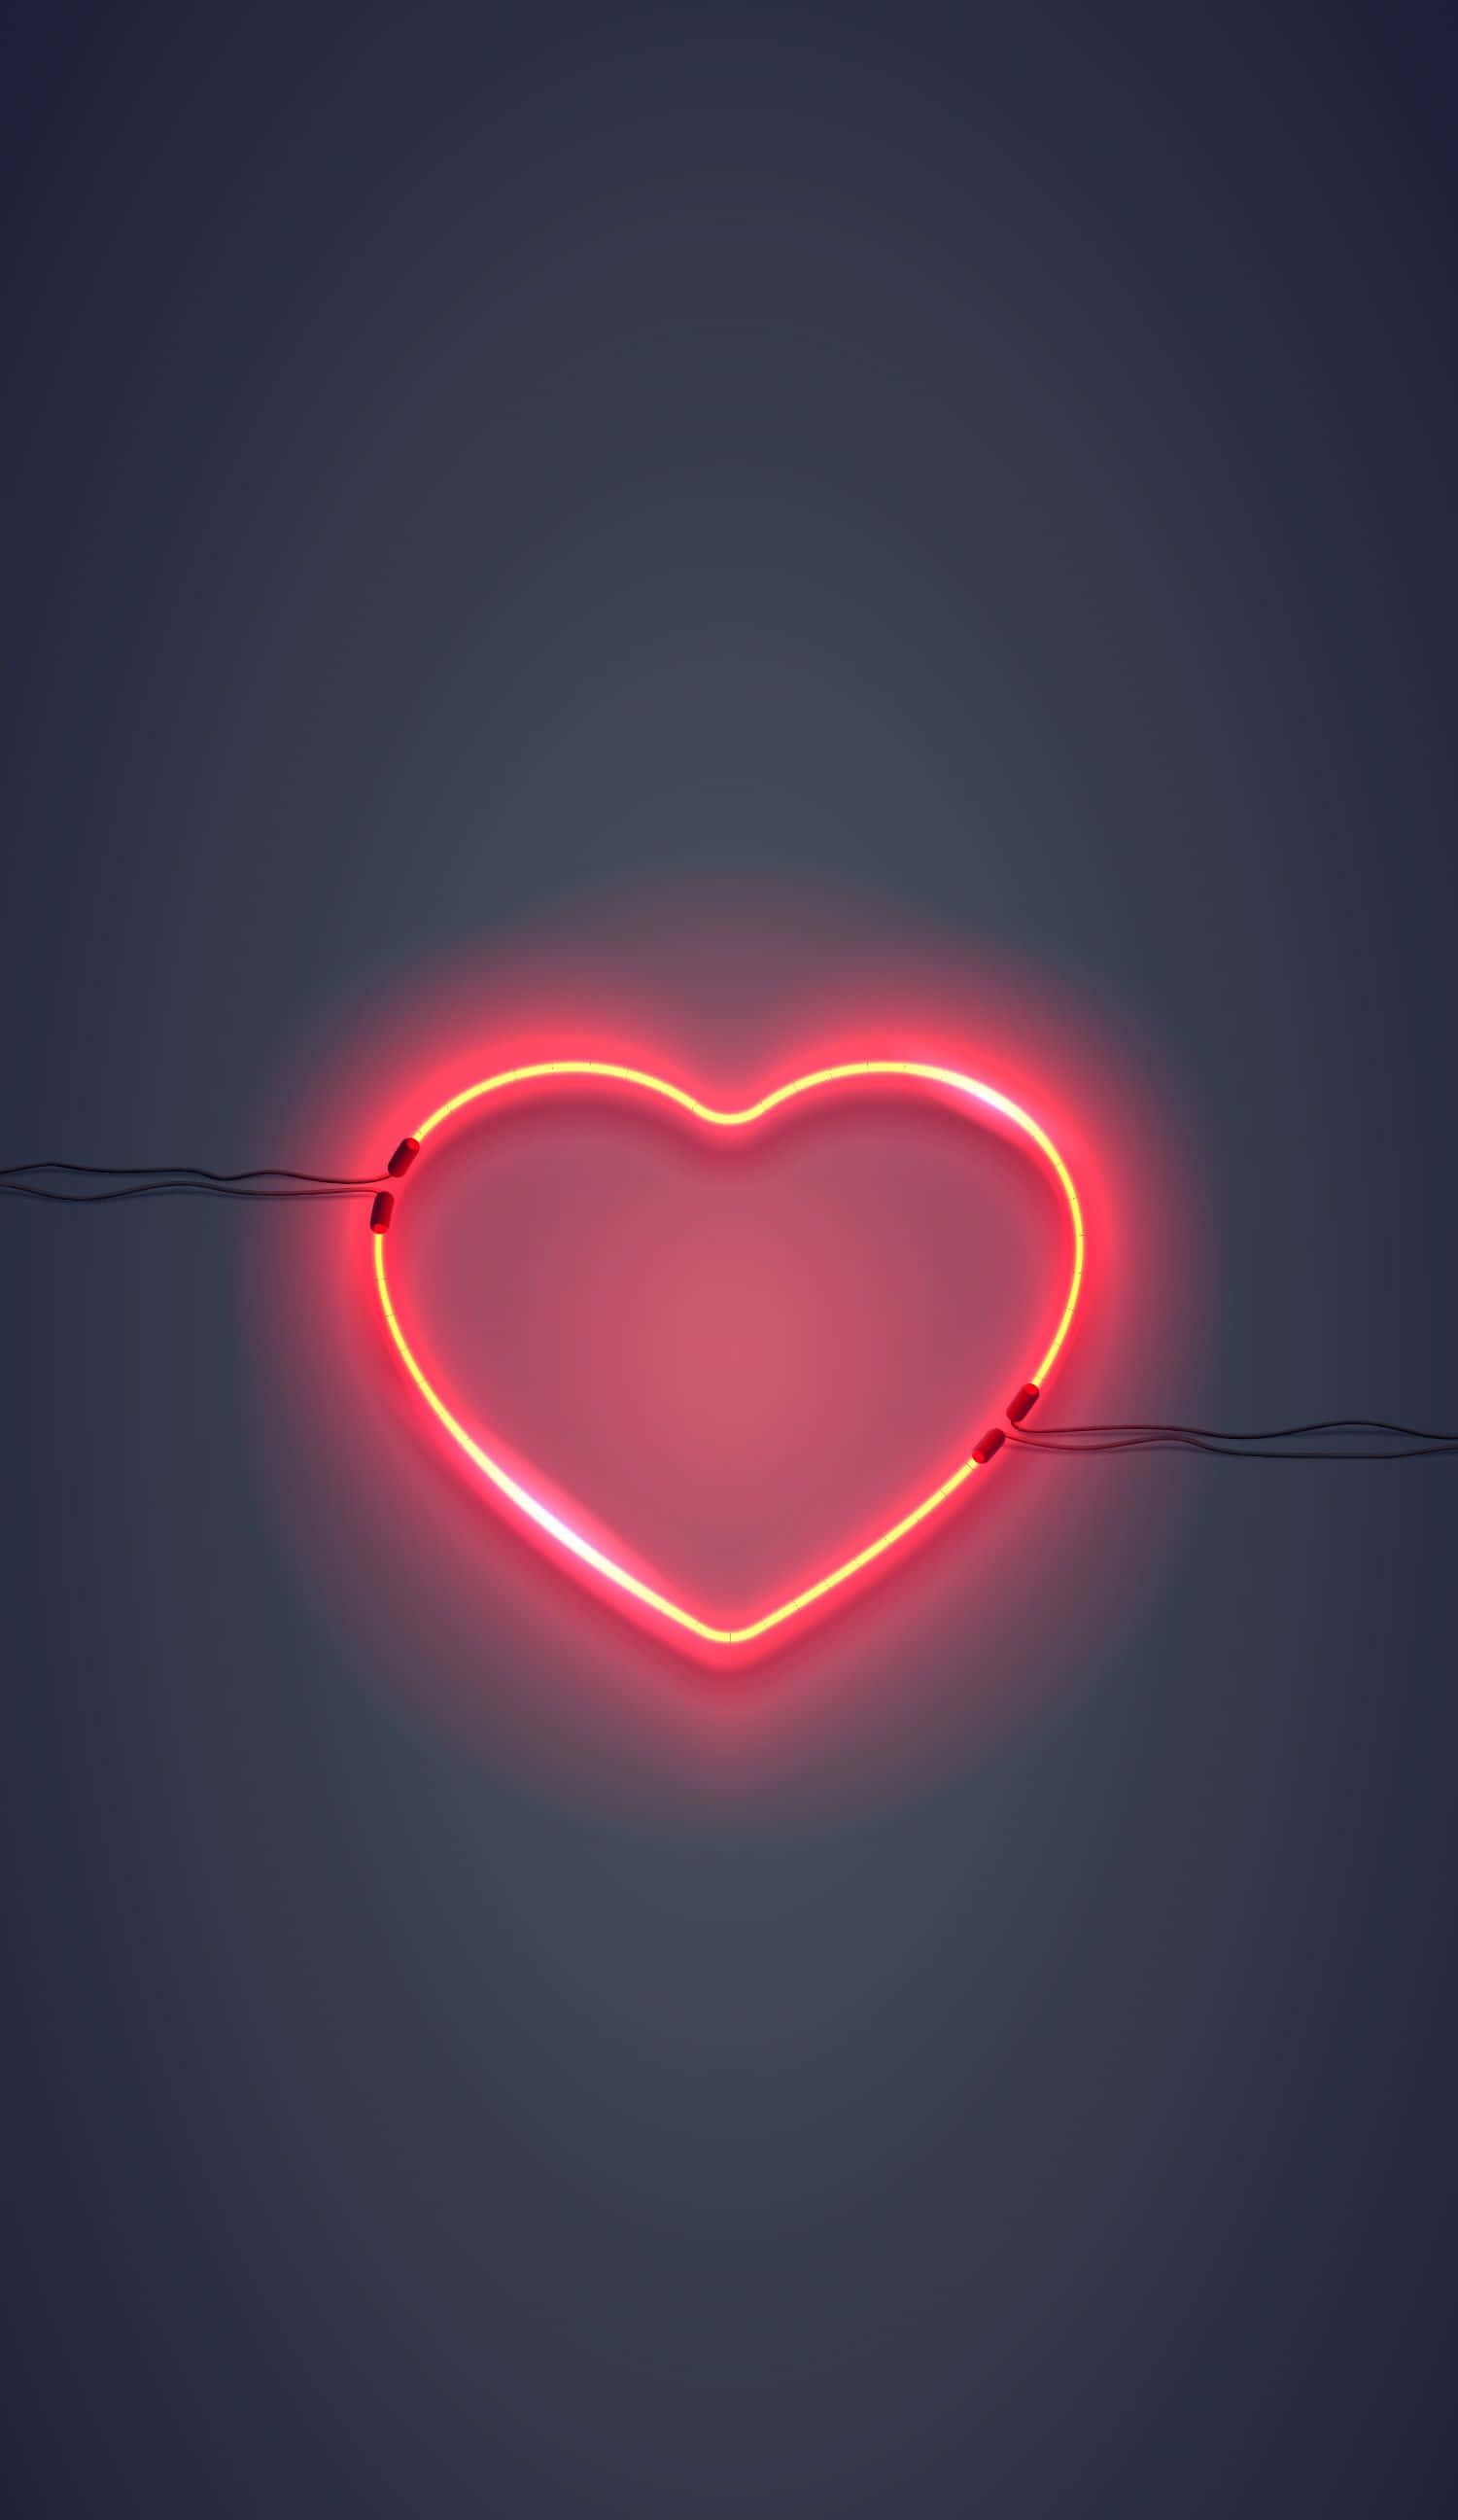 A Heart Neon Sign On A Dark Background Wallpaper